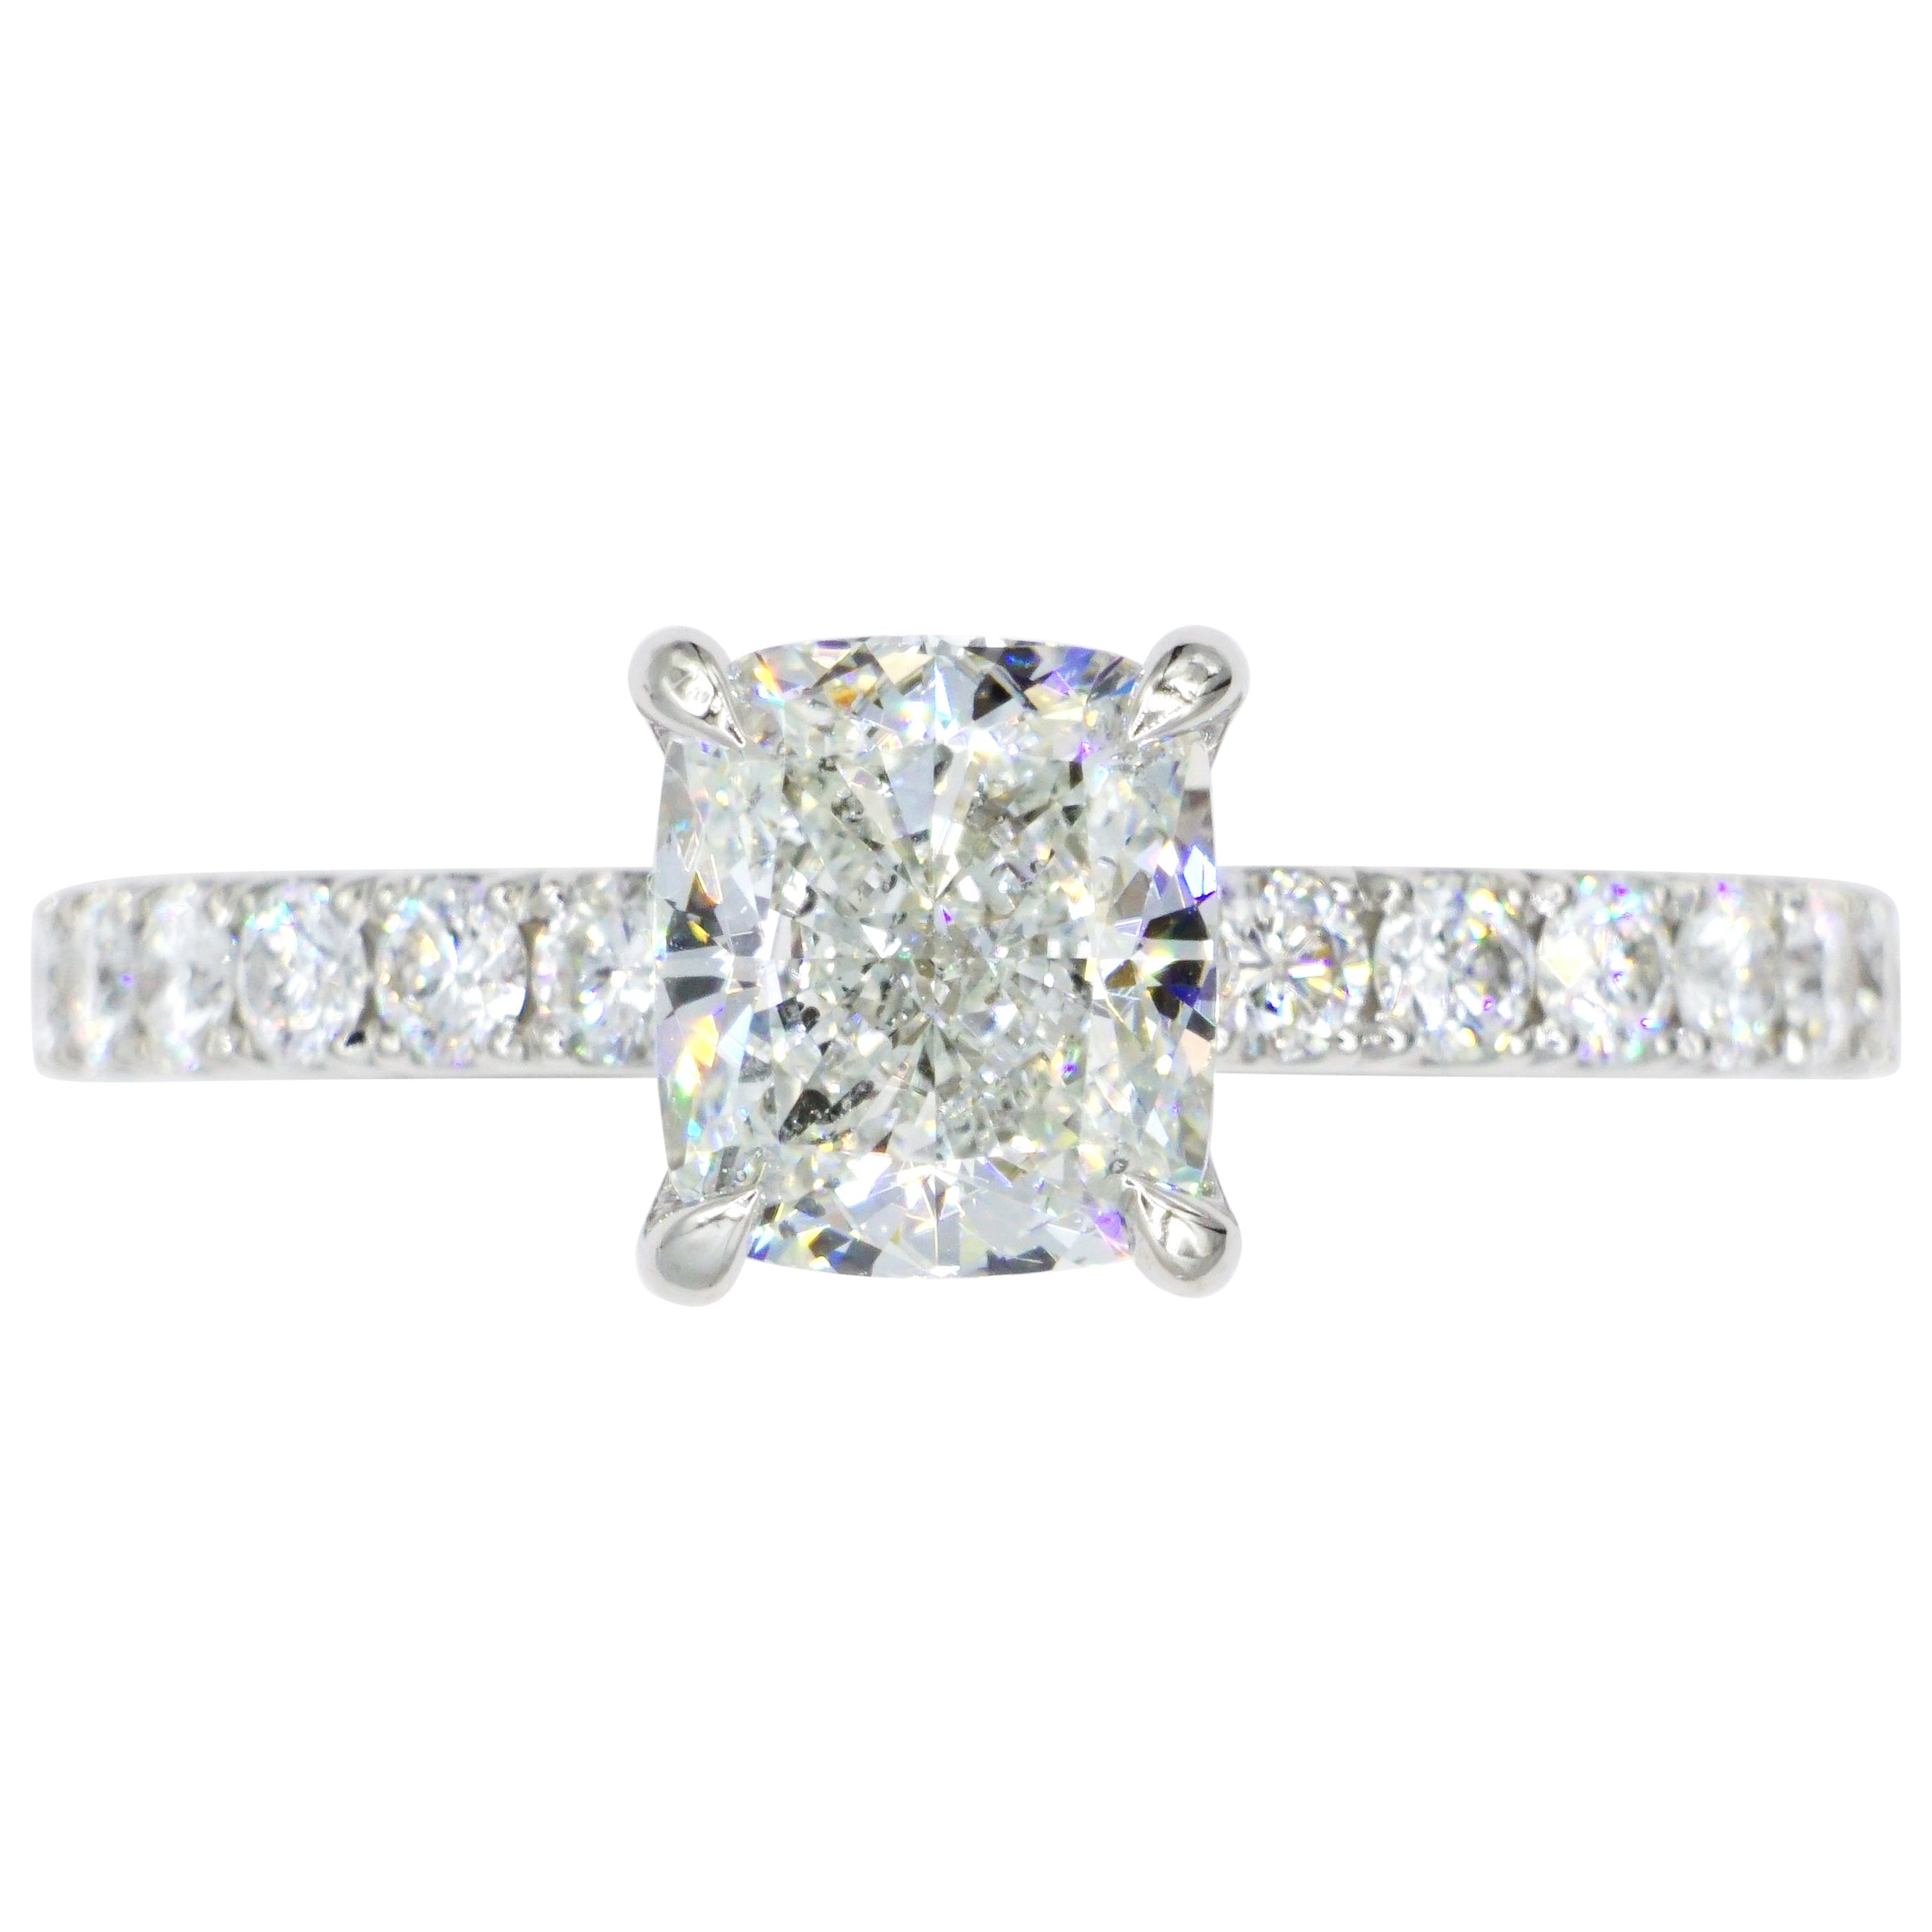 Platinum Cushion 1.51ct Diamond Engagement Ring GIA Cert G SI2, size 6.25 